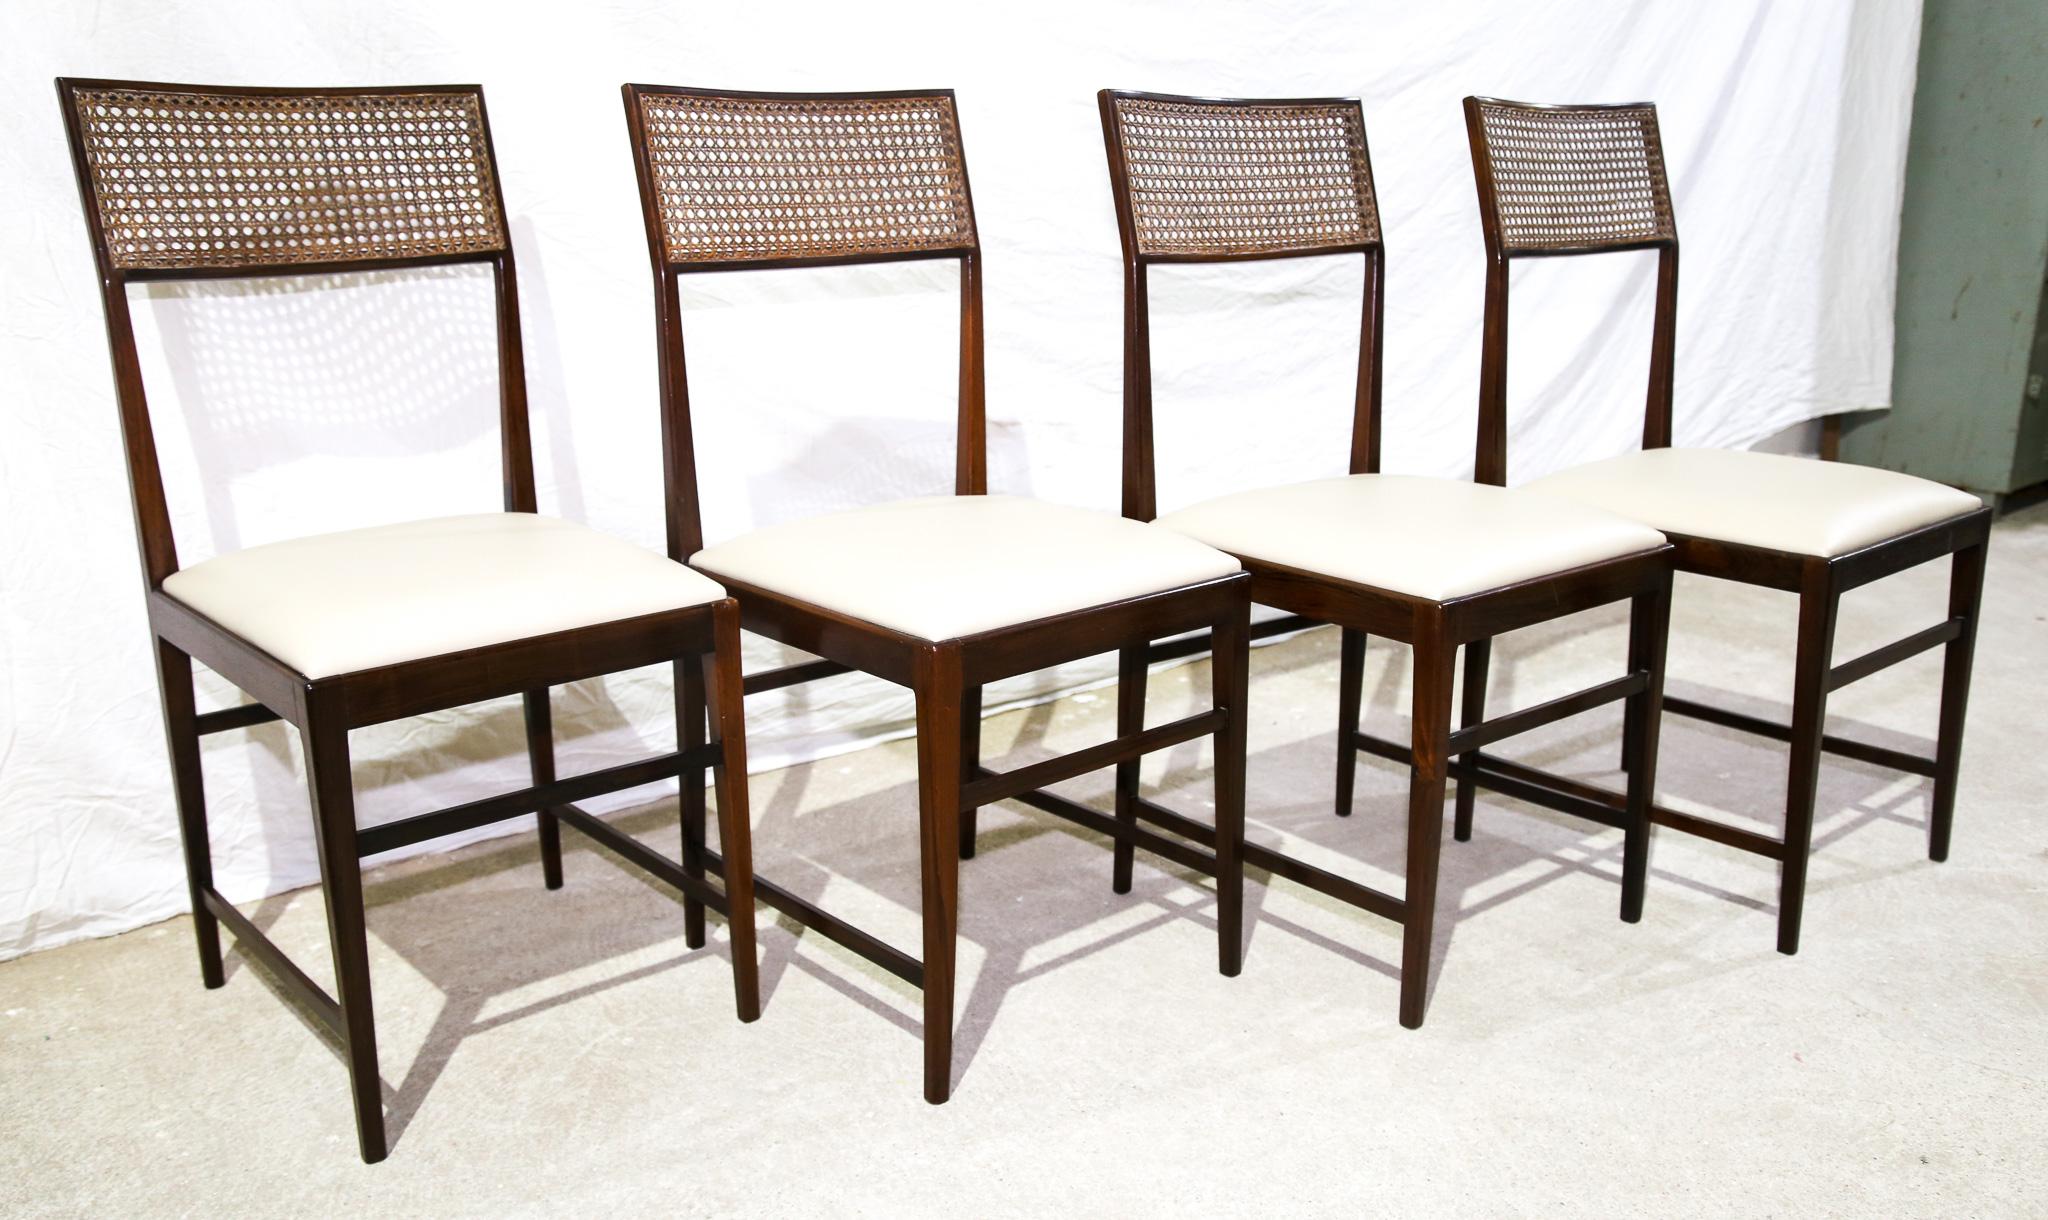 Brazilian Modern 4 Chair Set in Hardwood, Cane, Leather, Joaquim Tenreiro 1950s For Sale 2